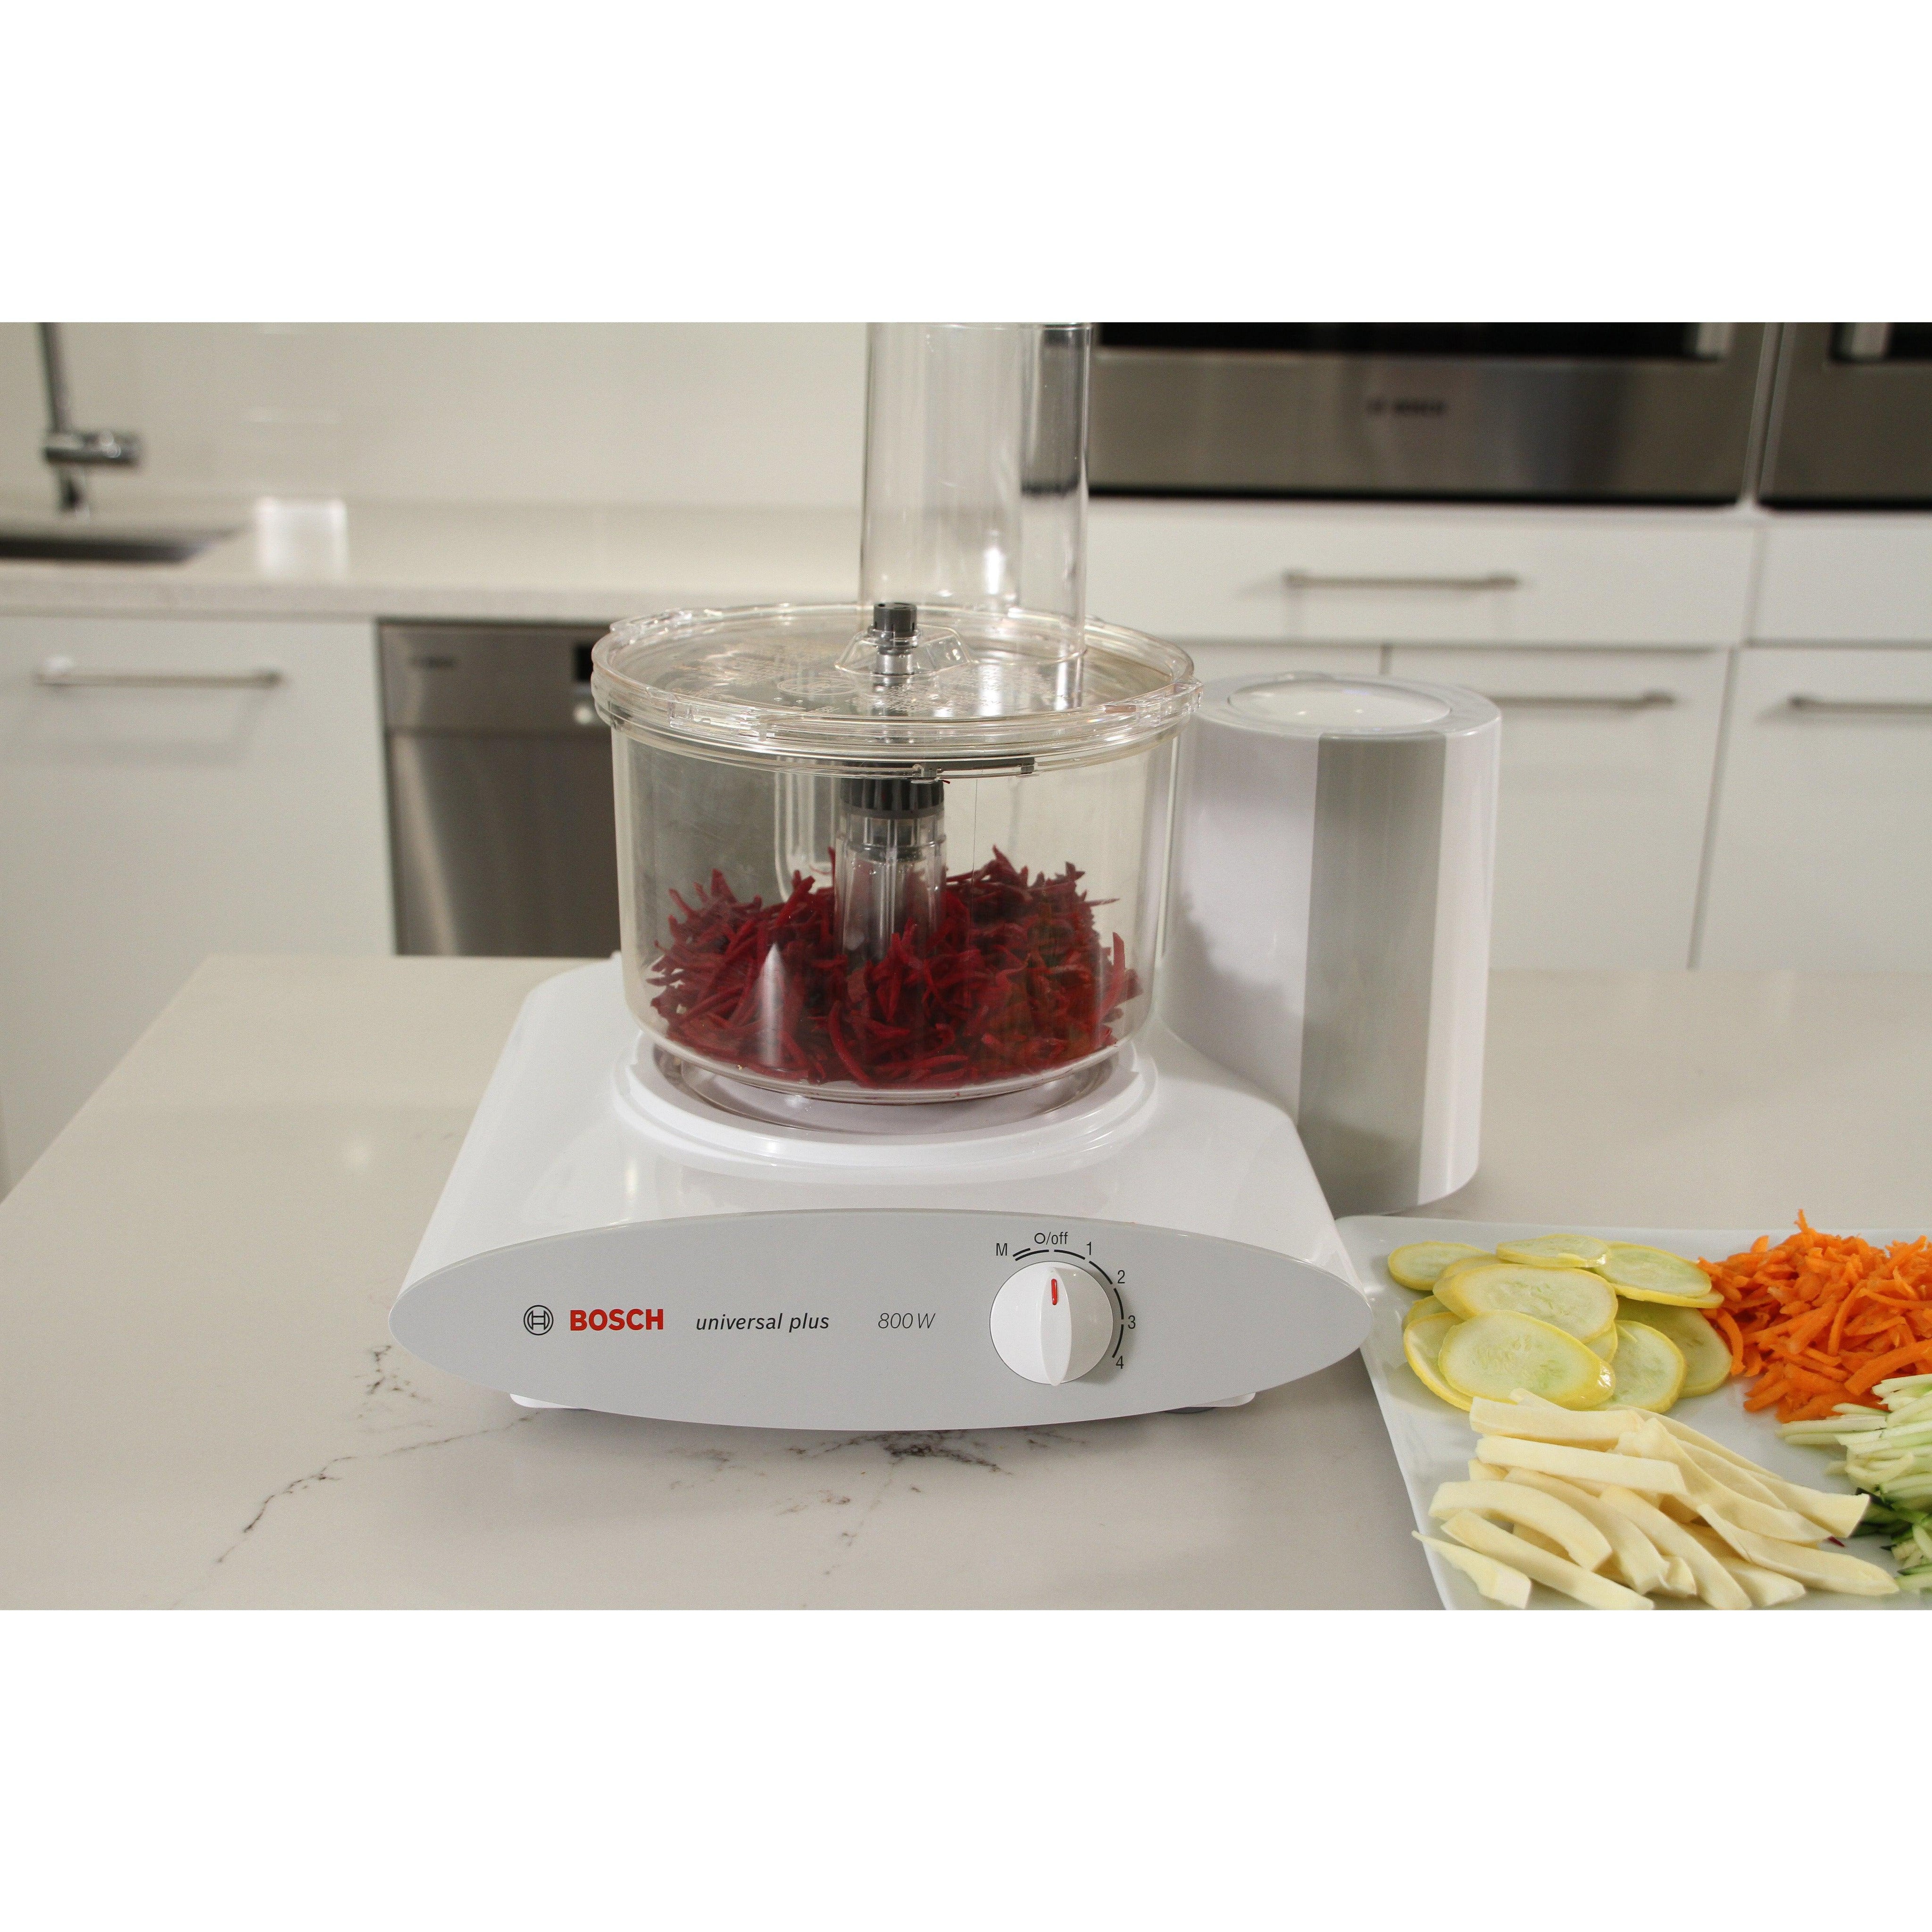  Bosch Universal Plus Food Processor Attachment for Universal  Plus Mixer: Home & Kitchen